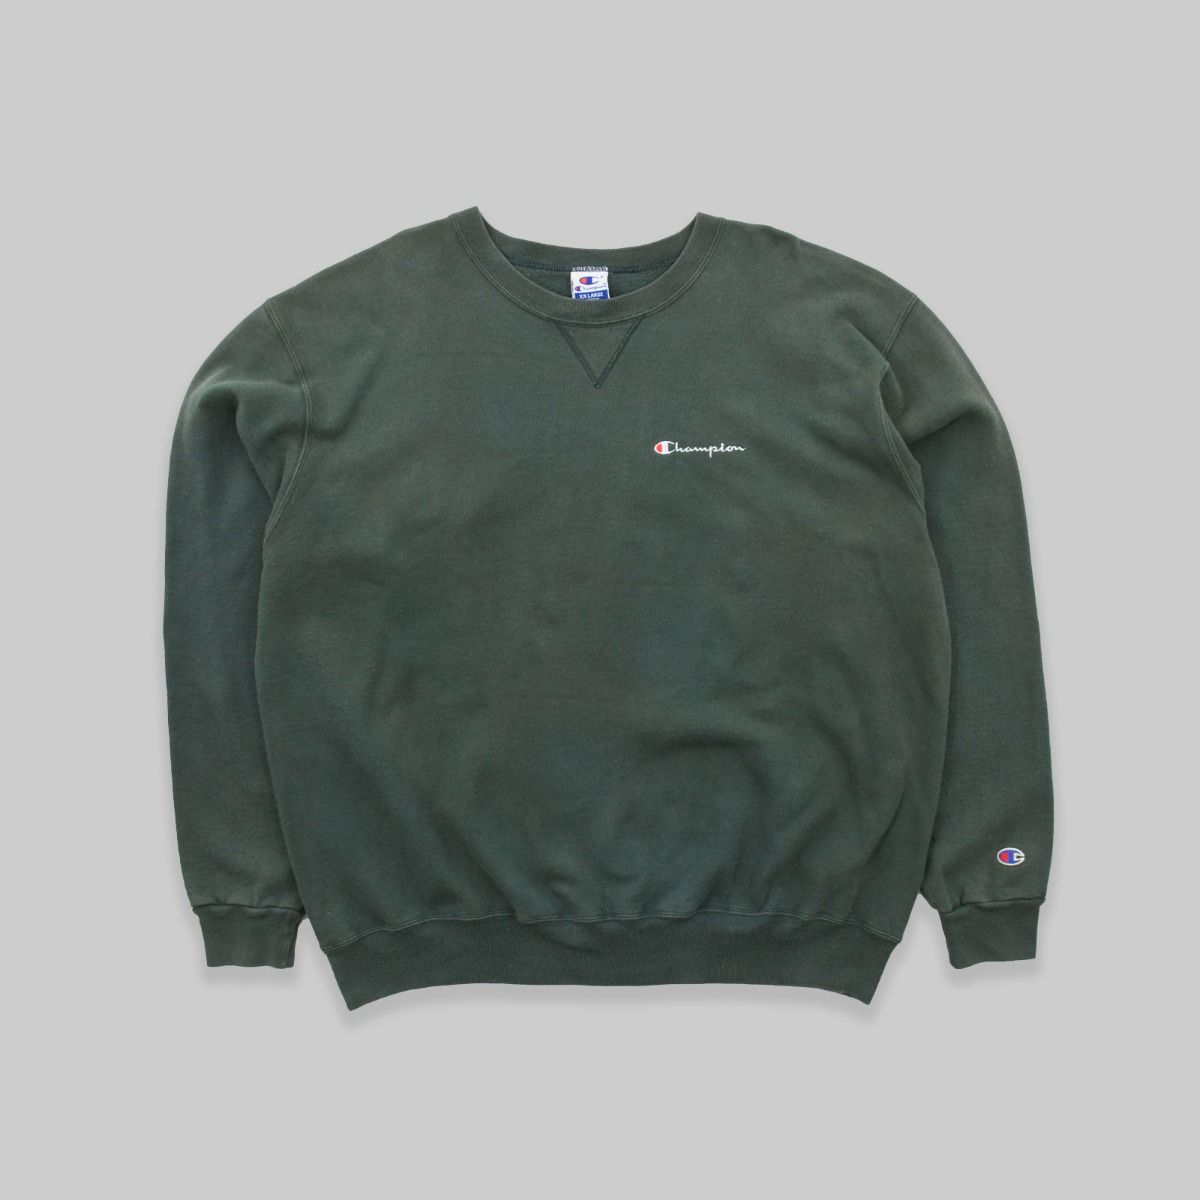 Champion 1990s Sweatshirt